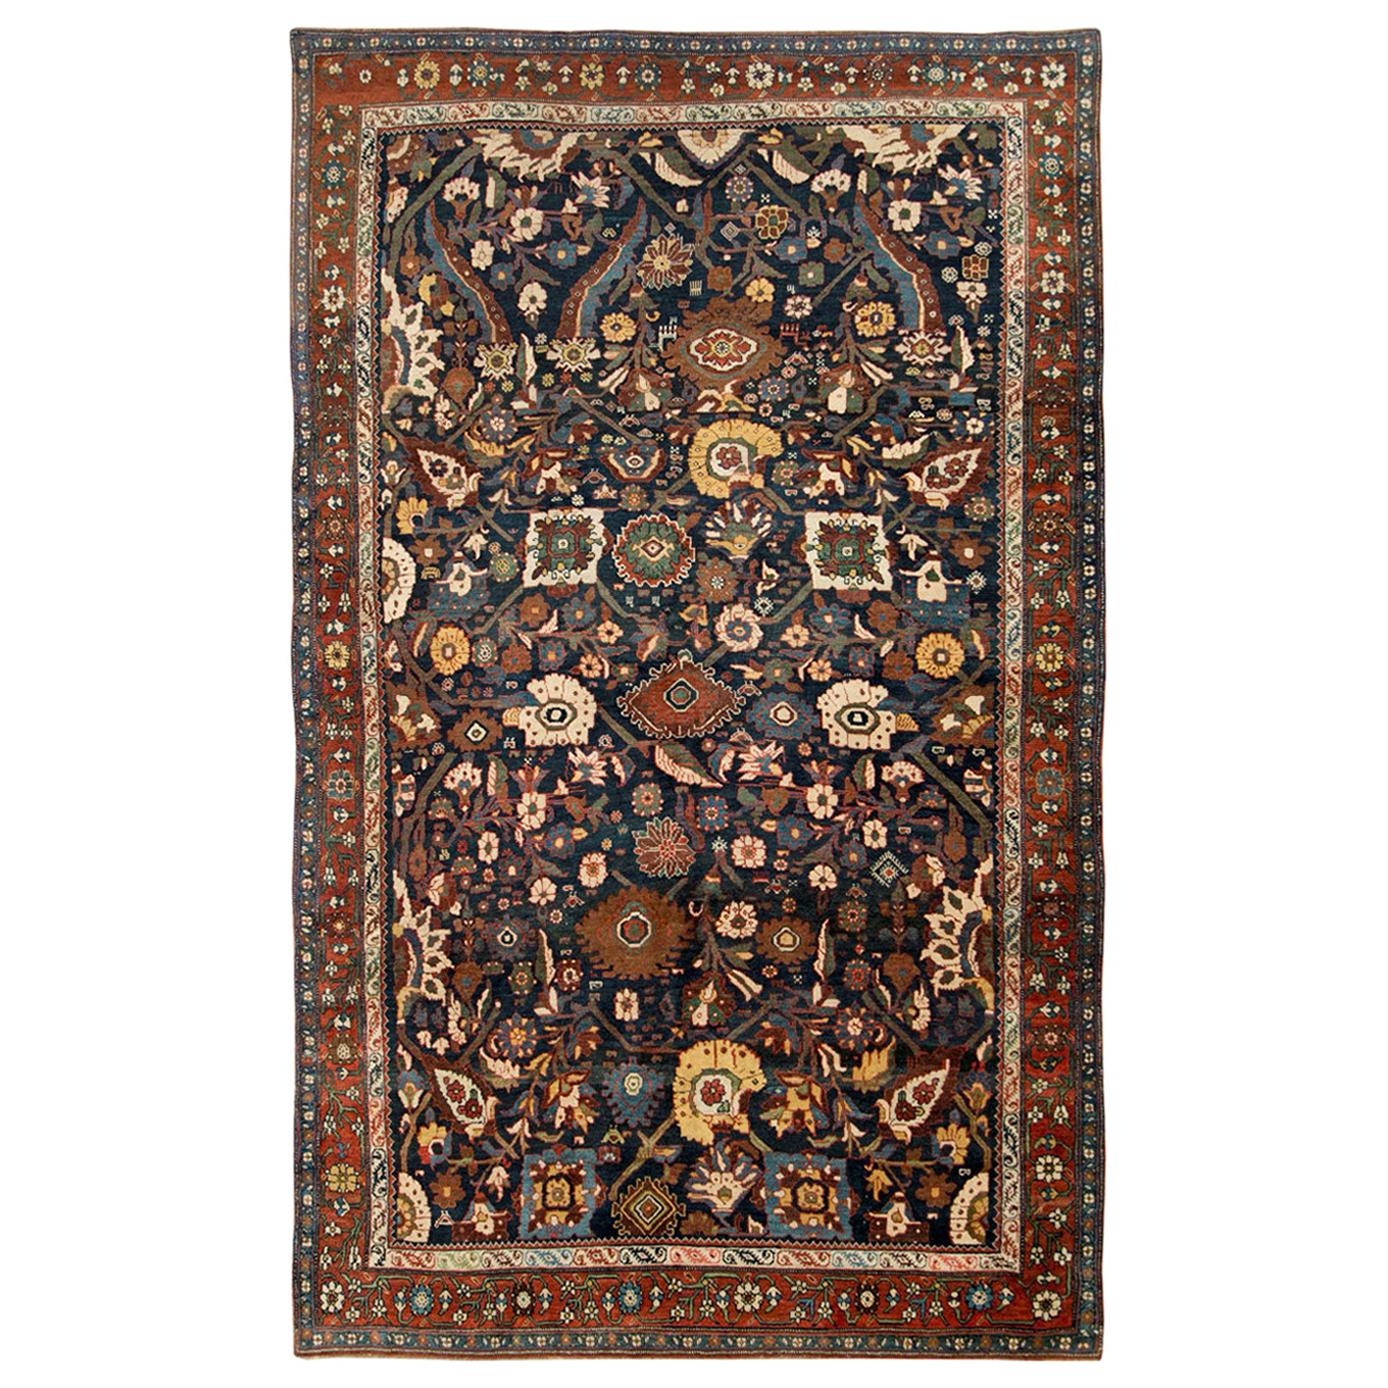 Early 20th Century Handmade Persian Bidjar Small Room Size Carpet For Sale